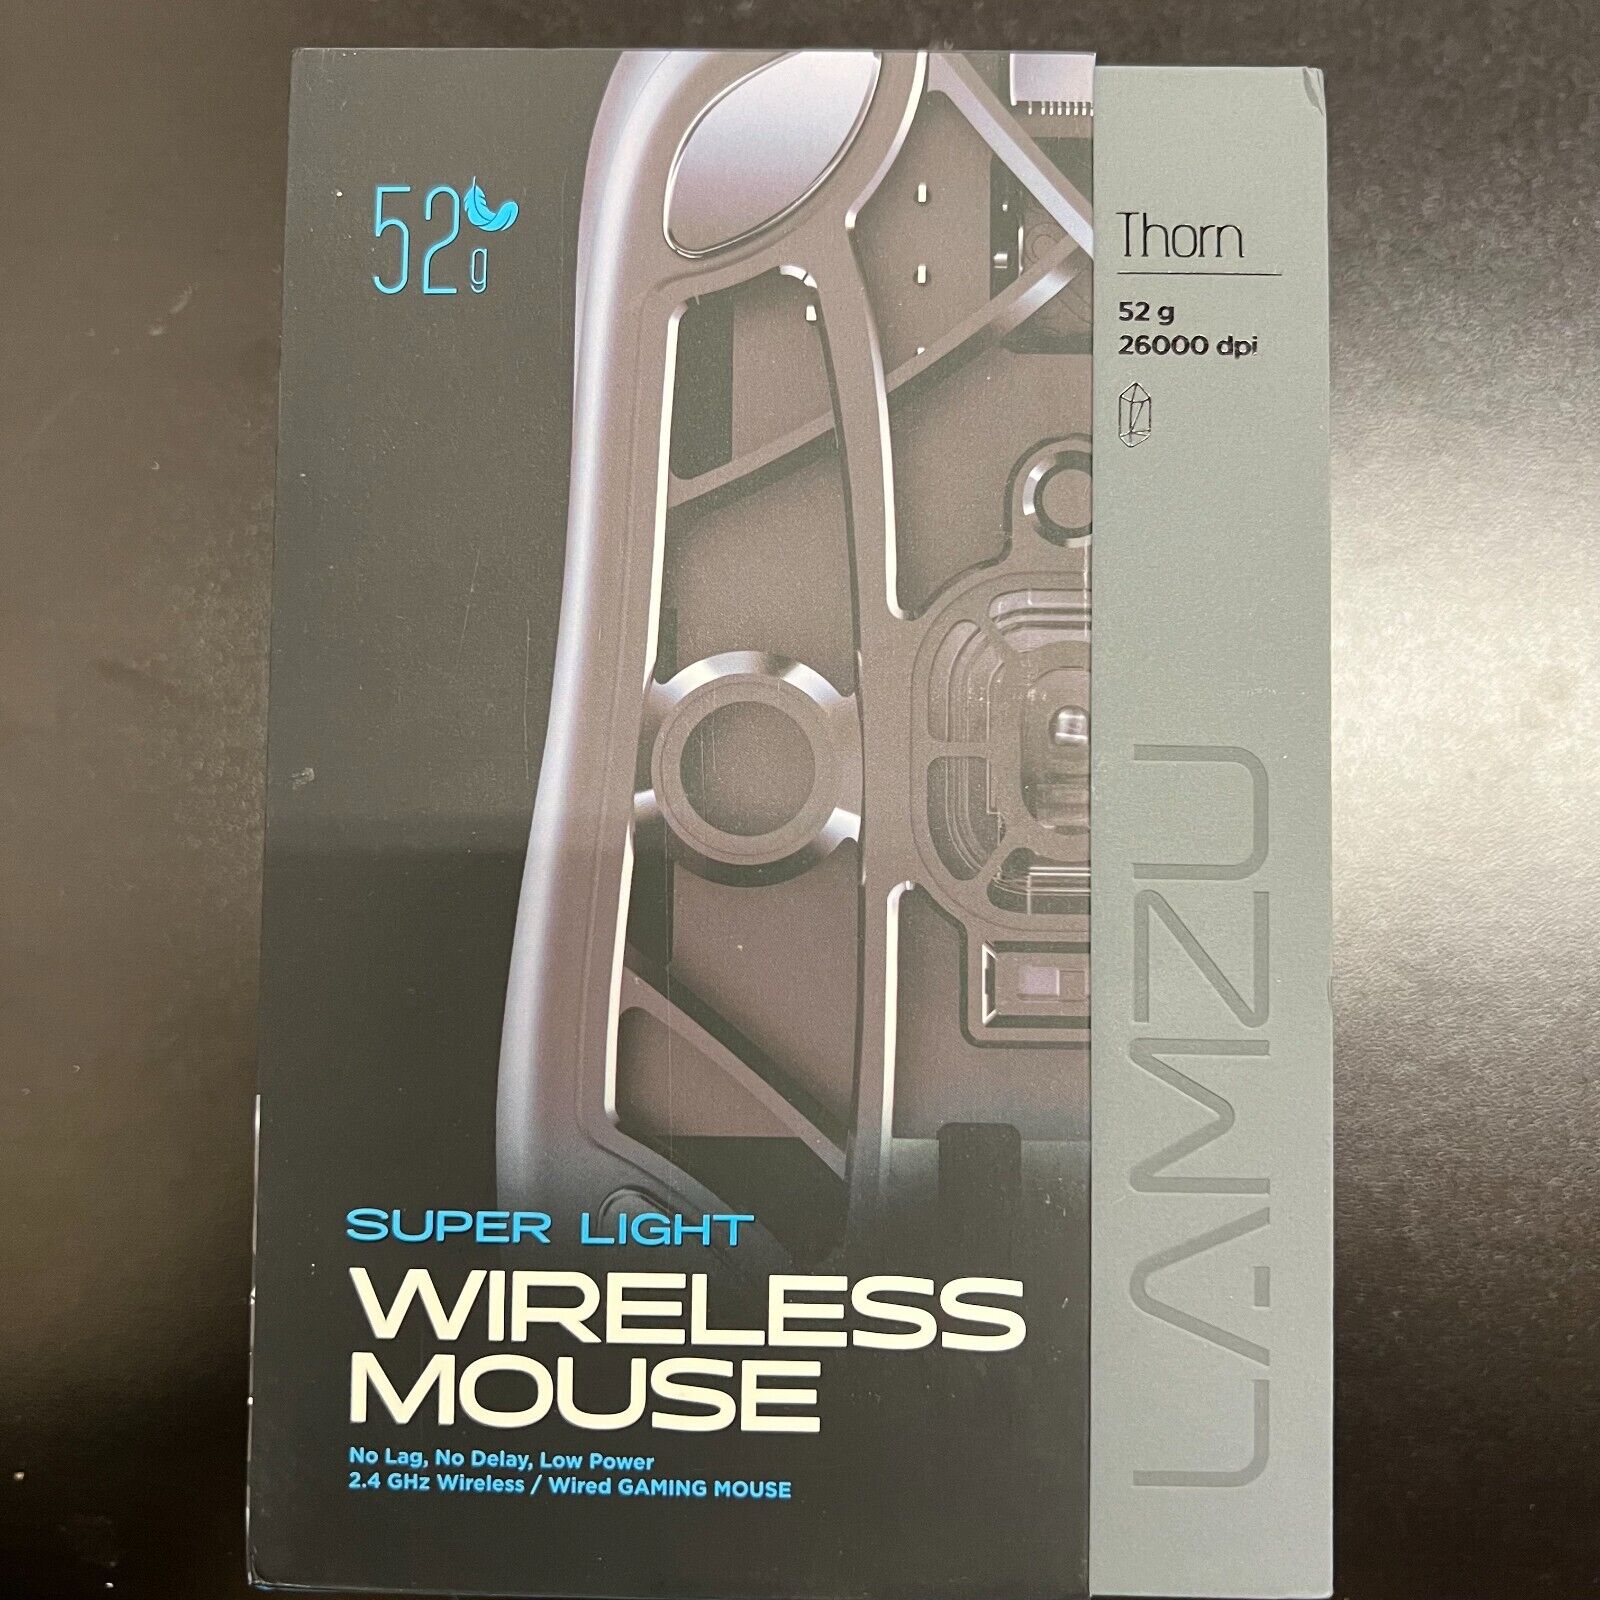 Lamzu Atlantis 55g Black Wireless 2.4 GHz 26000 Dpi Superlight Gaming Mouse